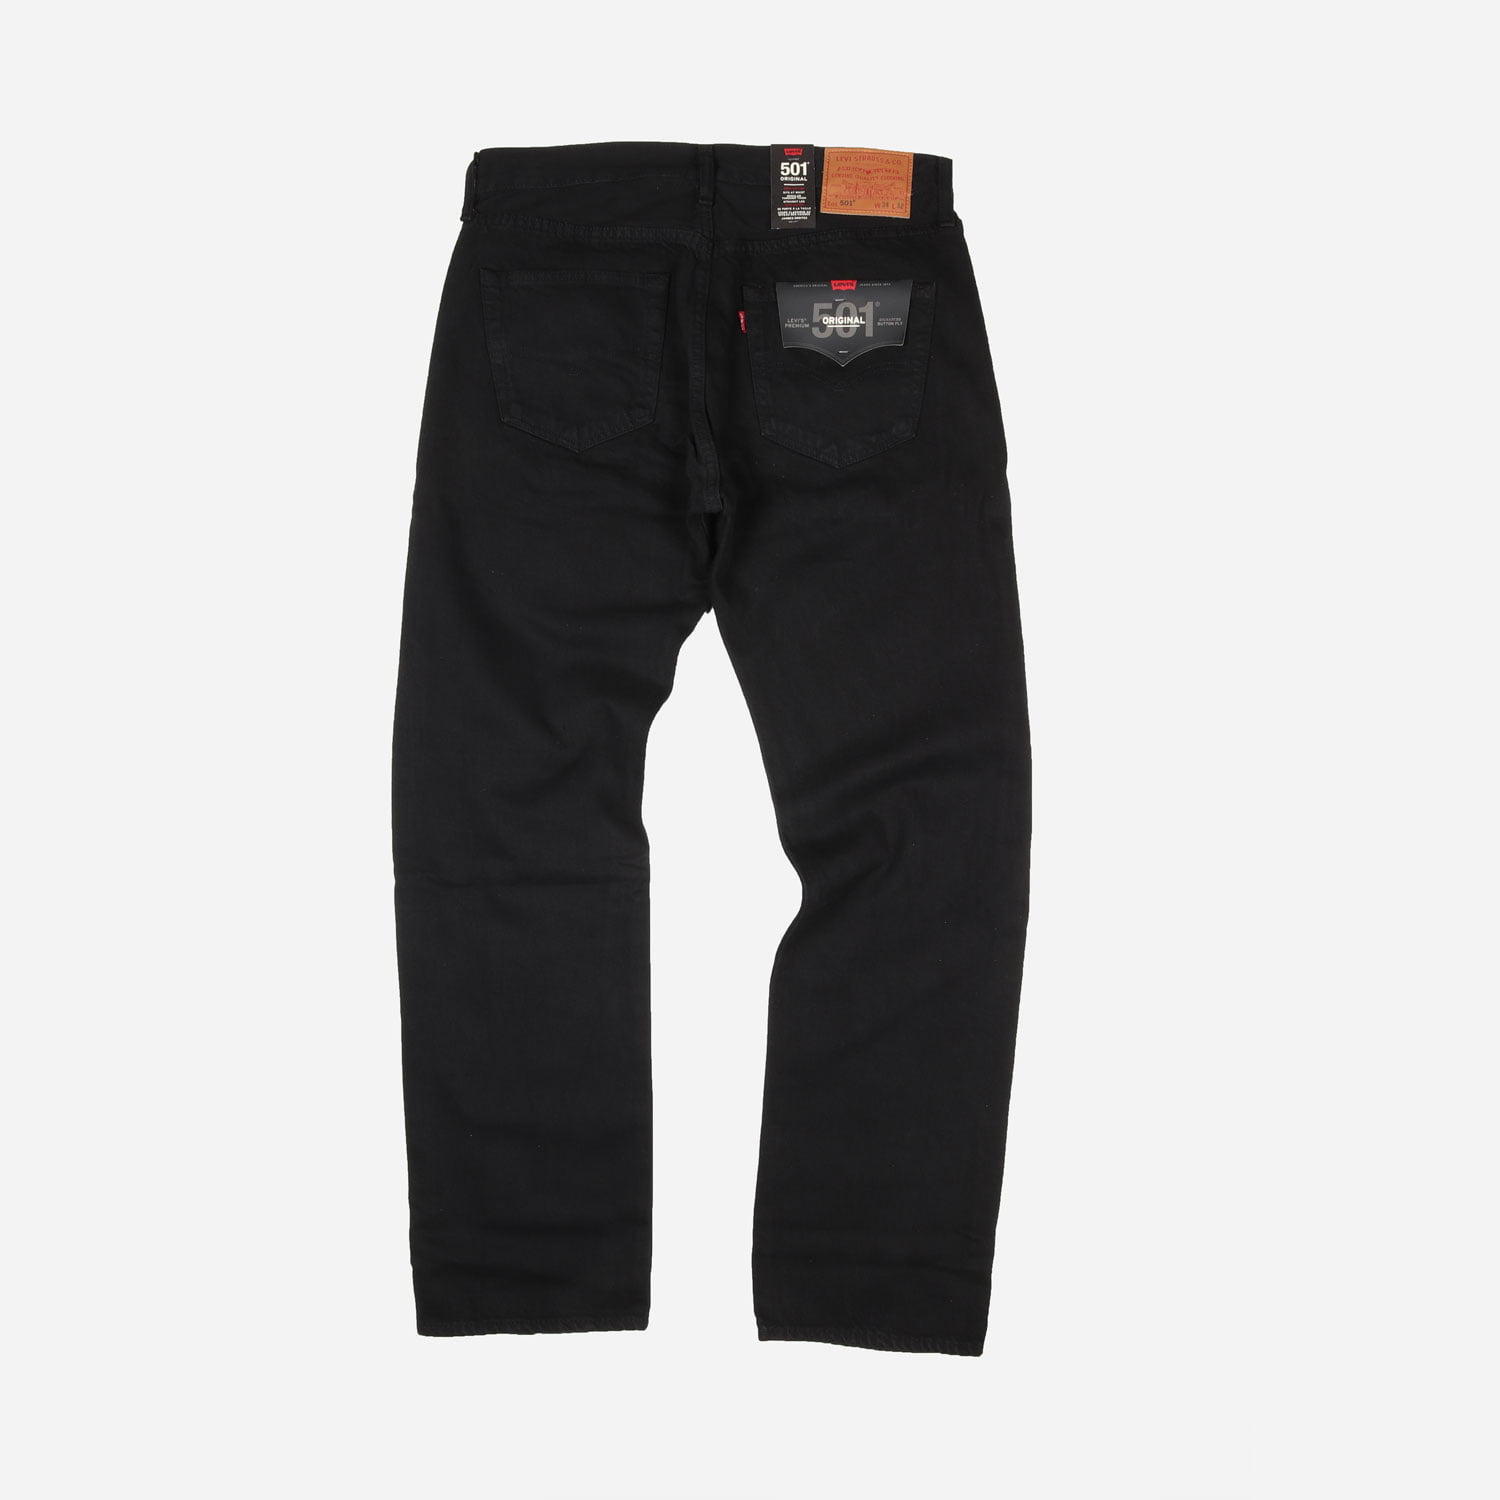 Levis 501 Original Regular Straight Fit Jean - Black/80701